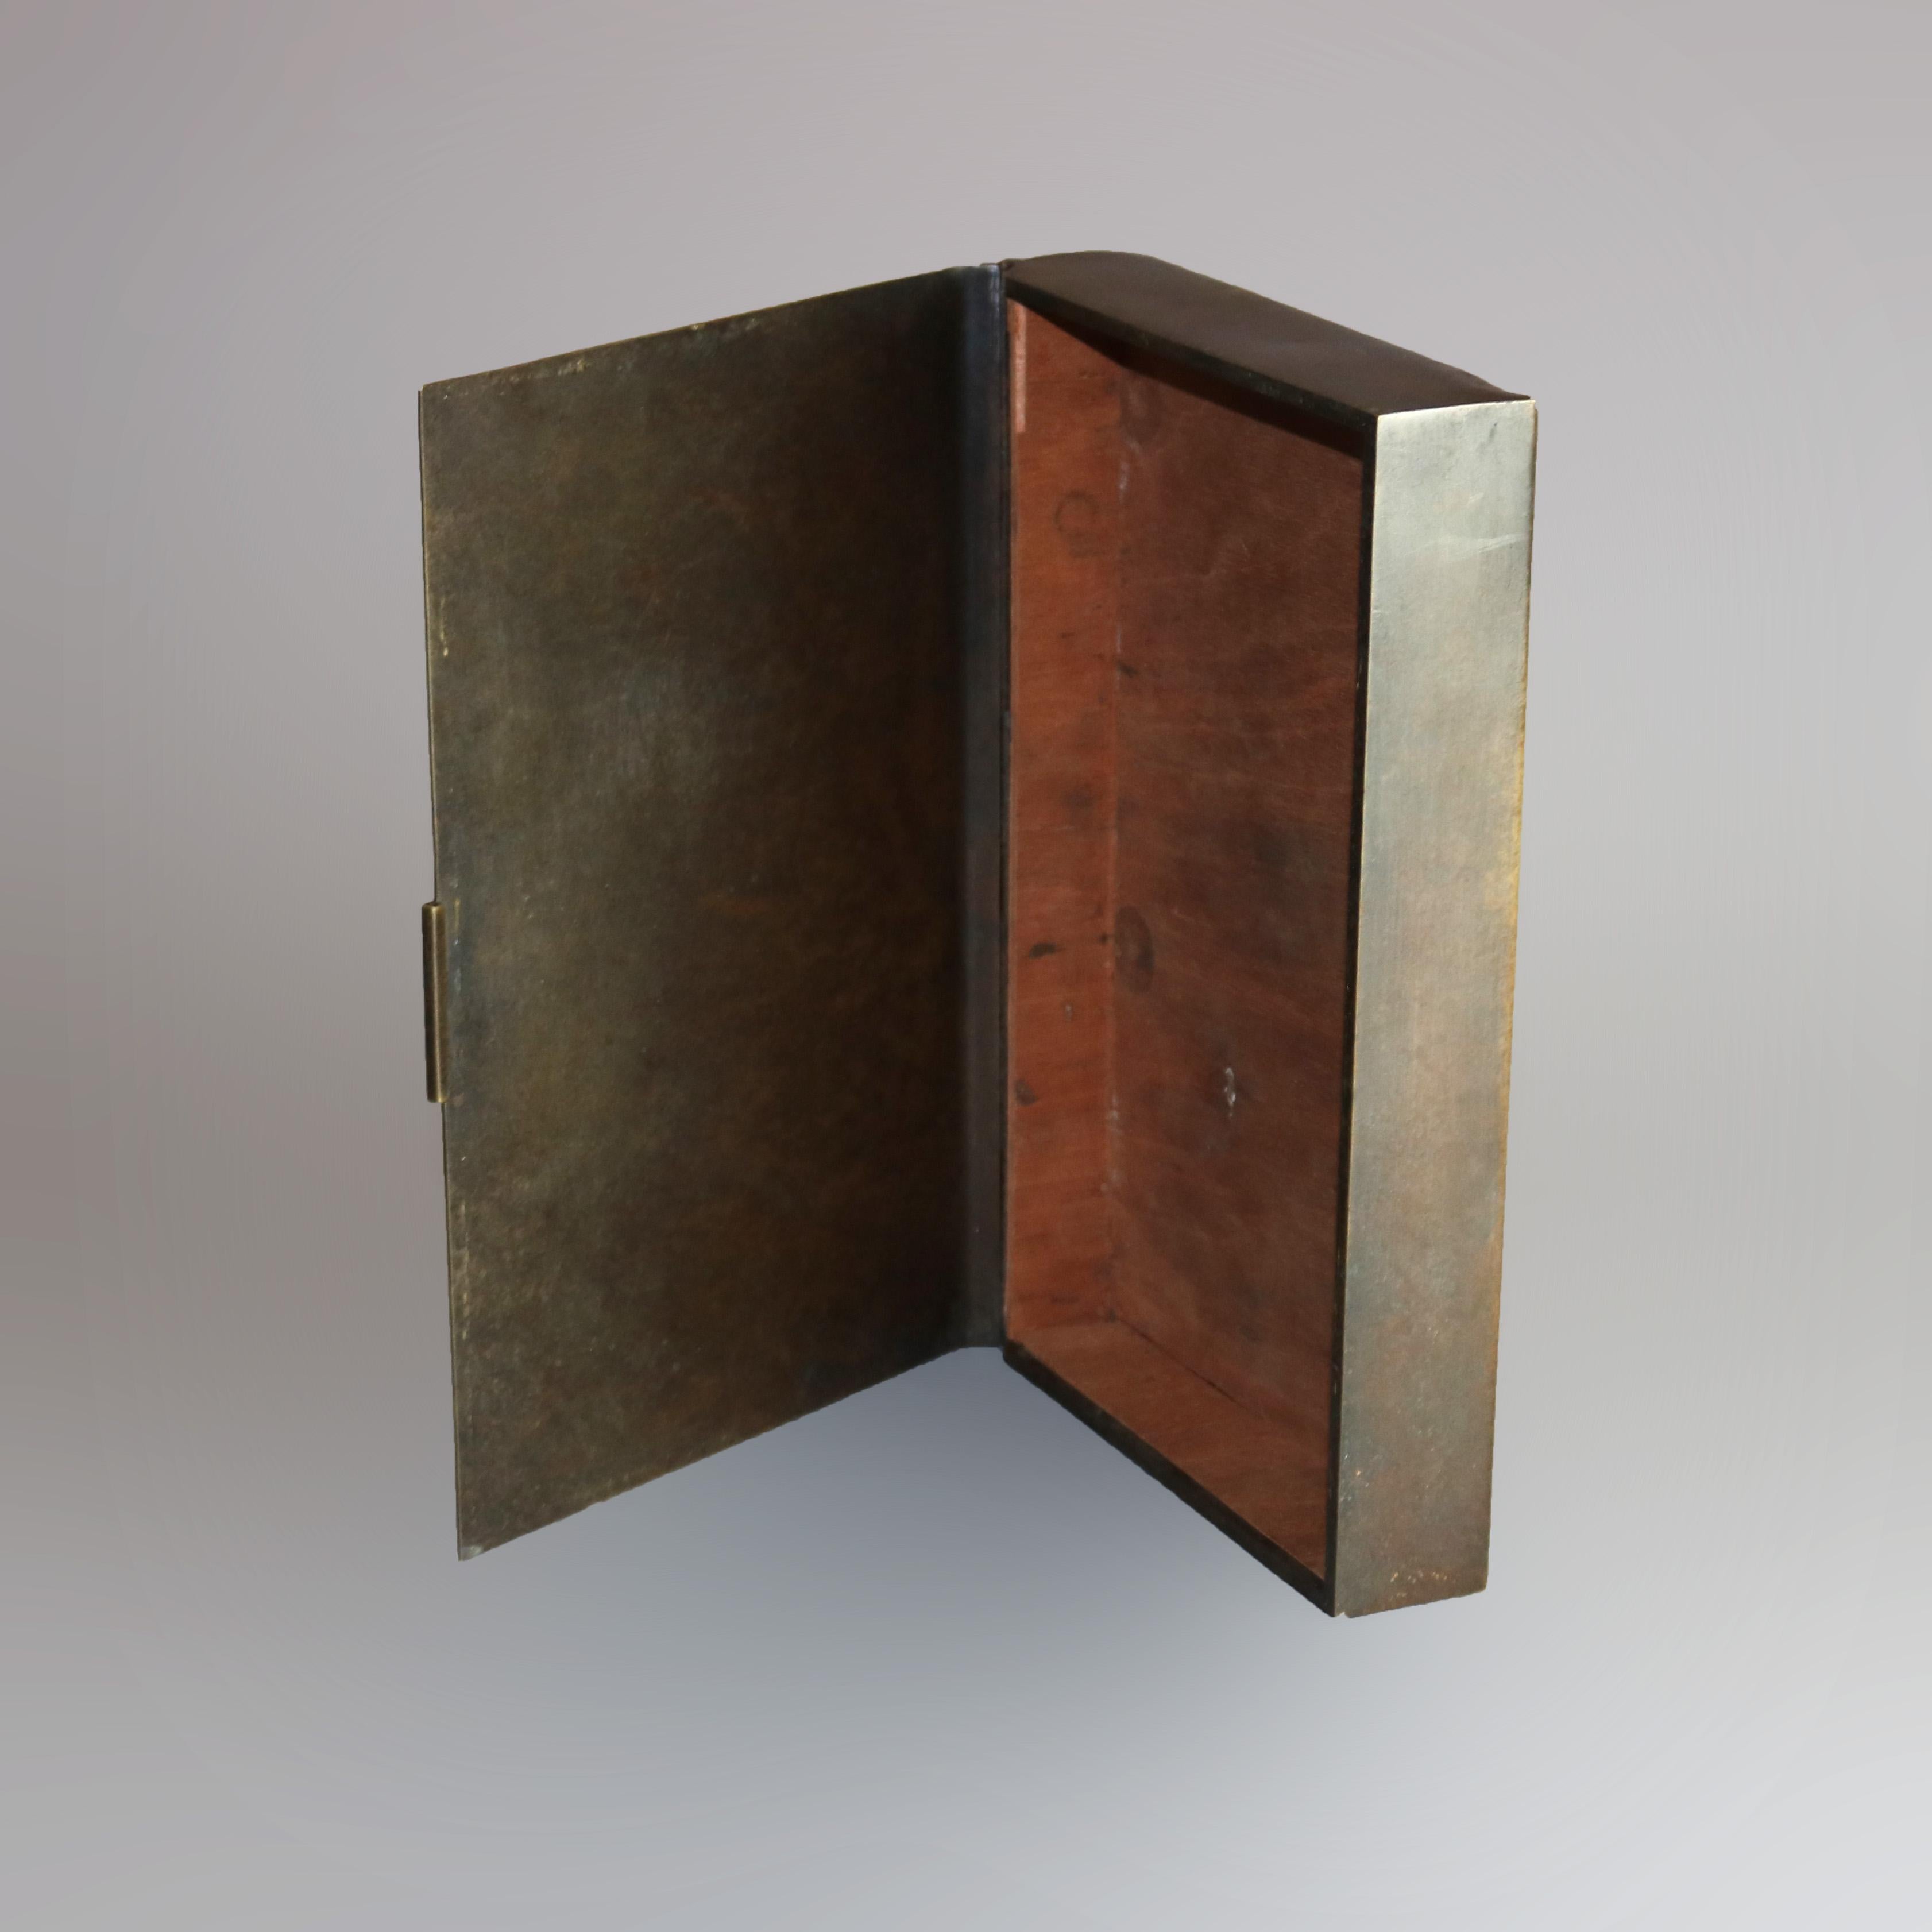 Carved Antique Arts & Crafts Dirk Van Erp Hammered Copper Box, Lined, circa 1910